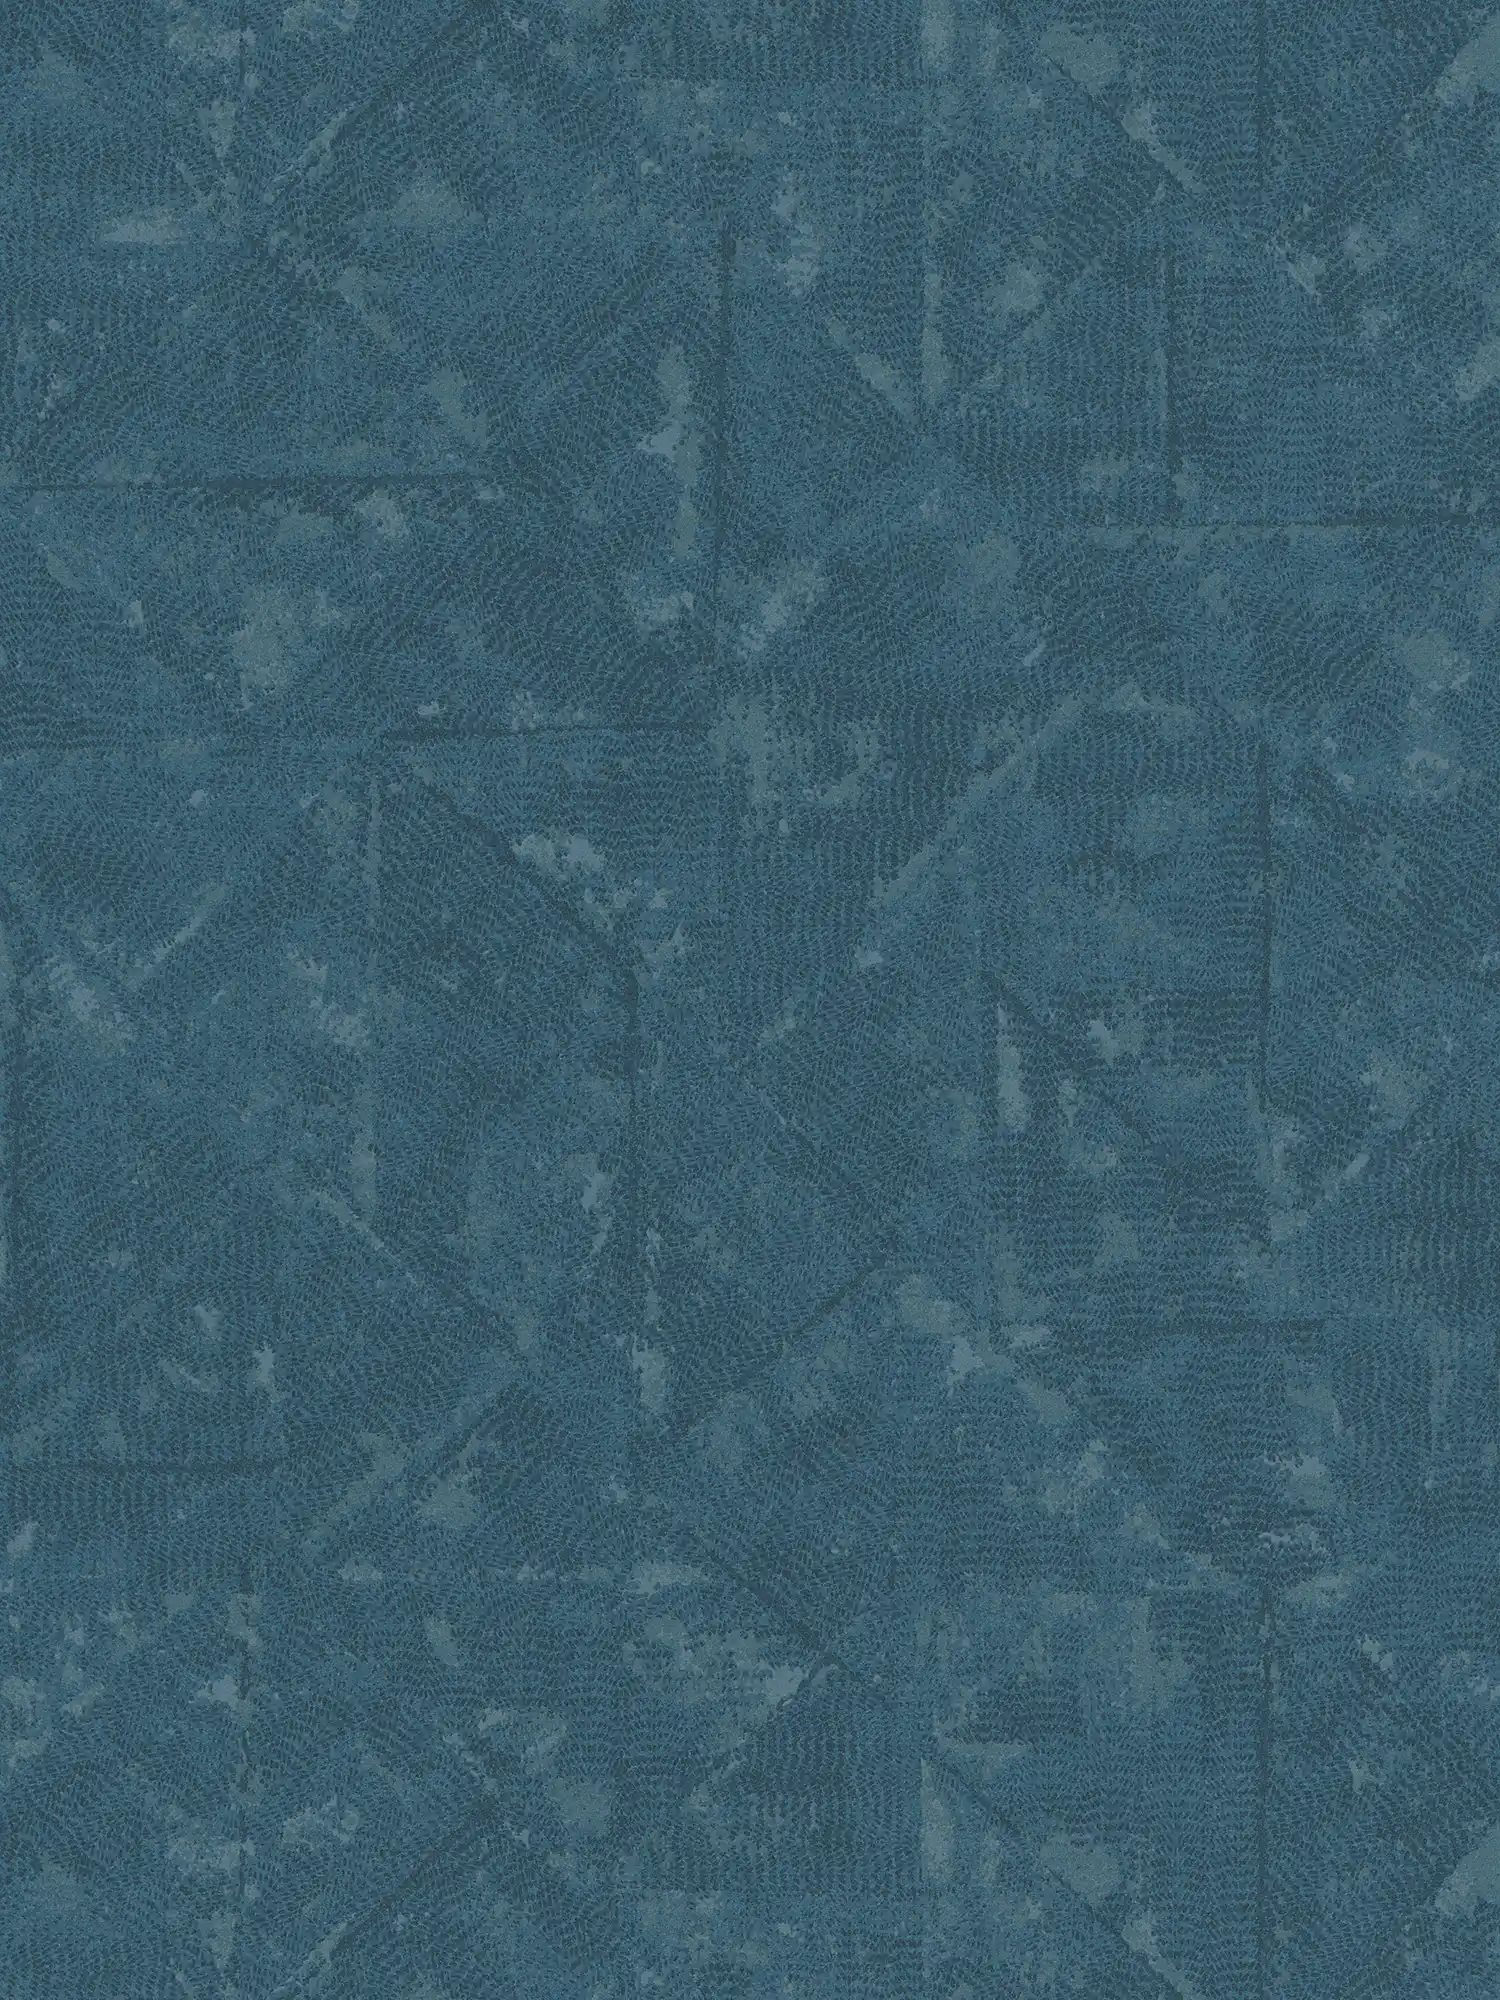 Petrol non-woven wallpaper asymmetrical details - blue, grey
